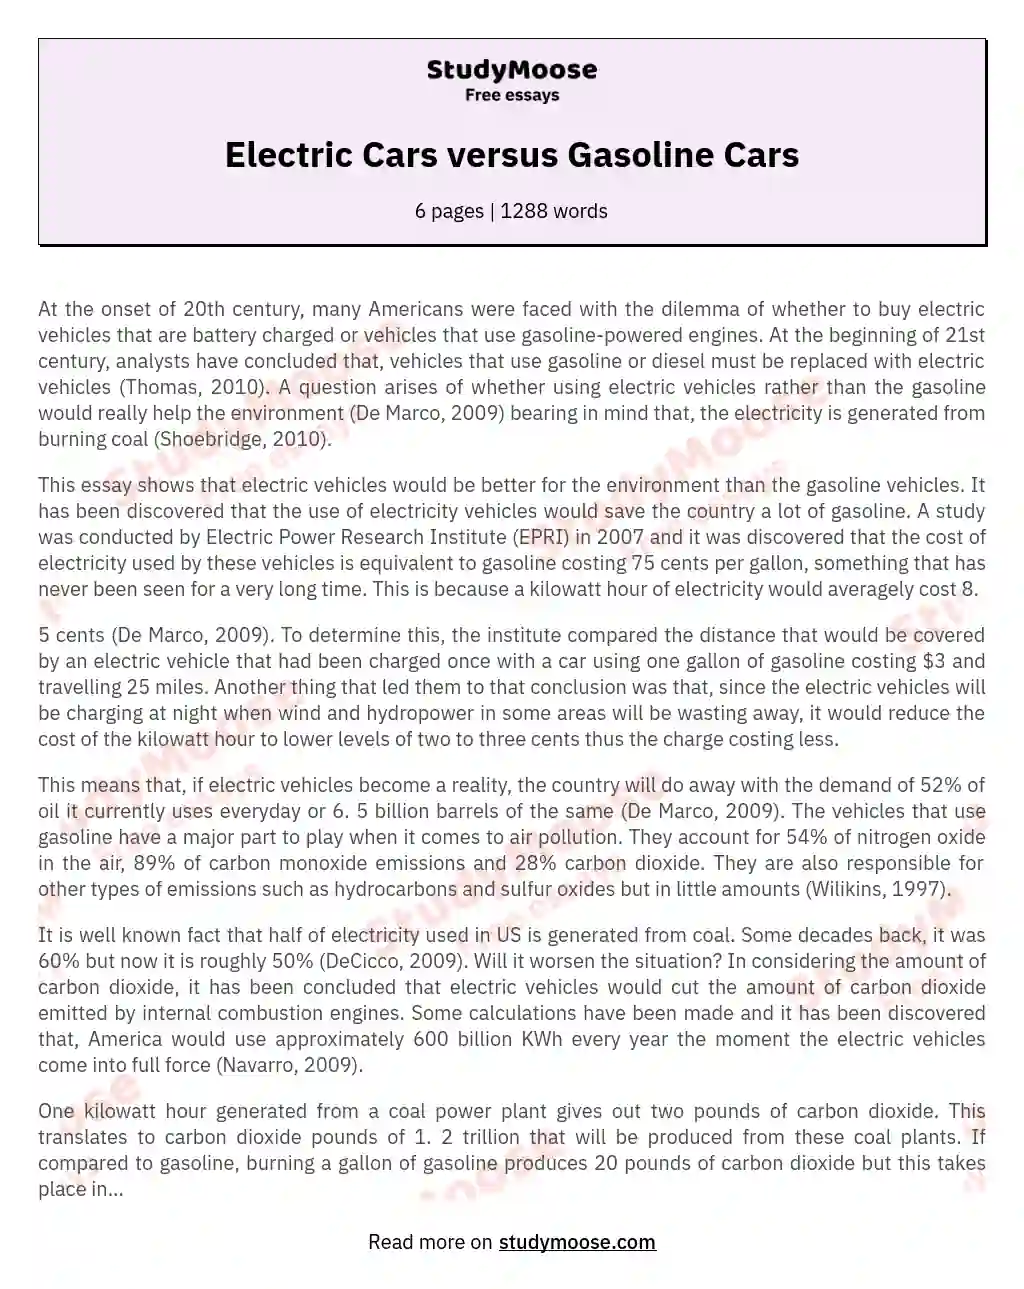 Electric Cars versus Gasoline Cars